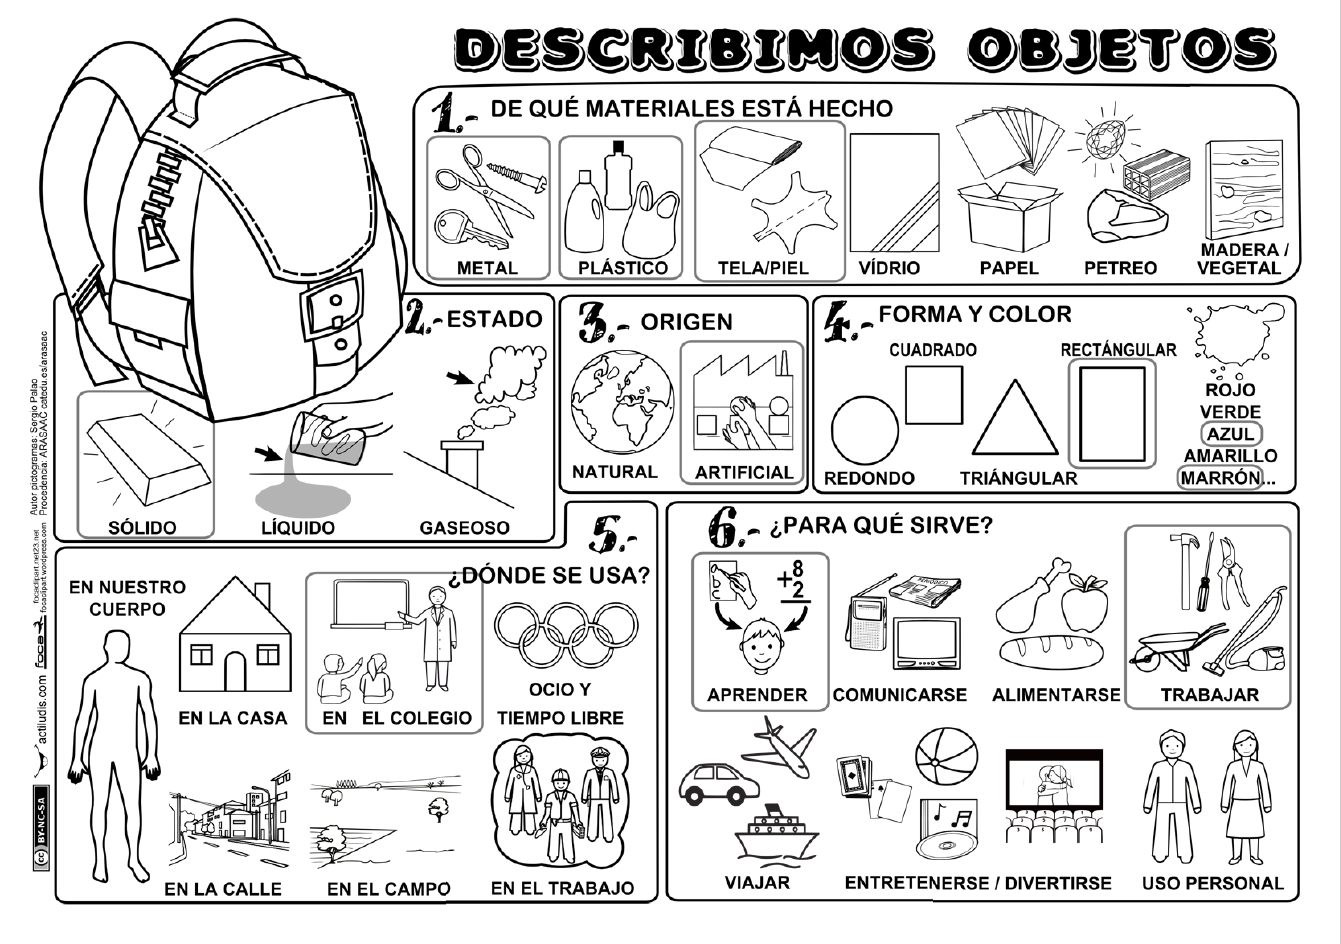 Describing objects. Describe objects. Objetos УТ У aula fotos. Испанский язык карточки Jugetas.